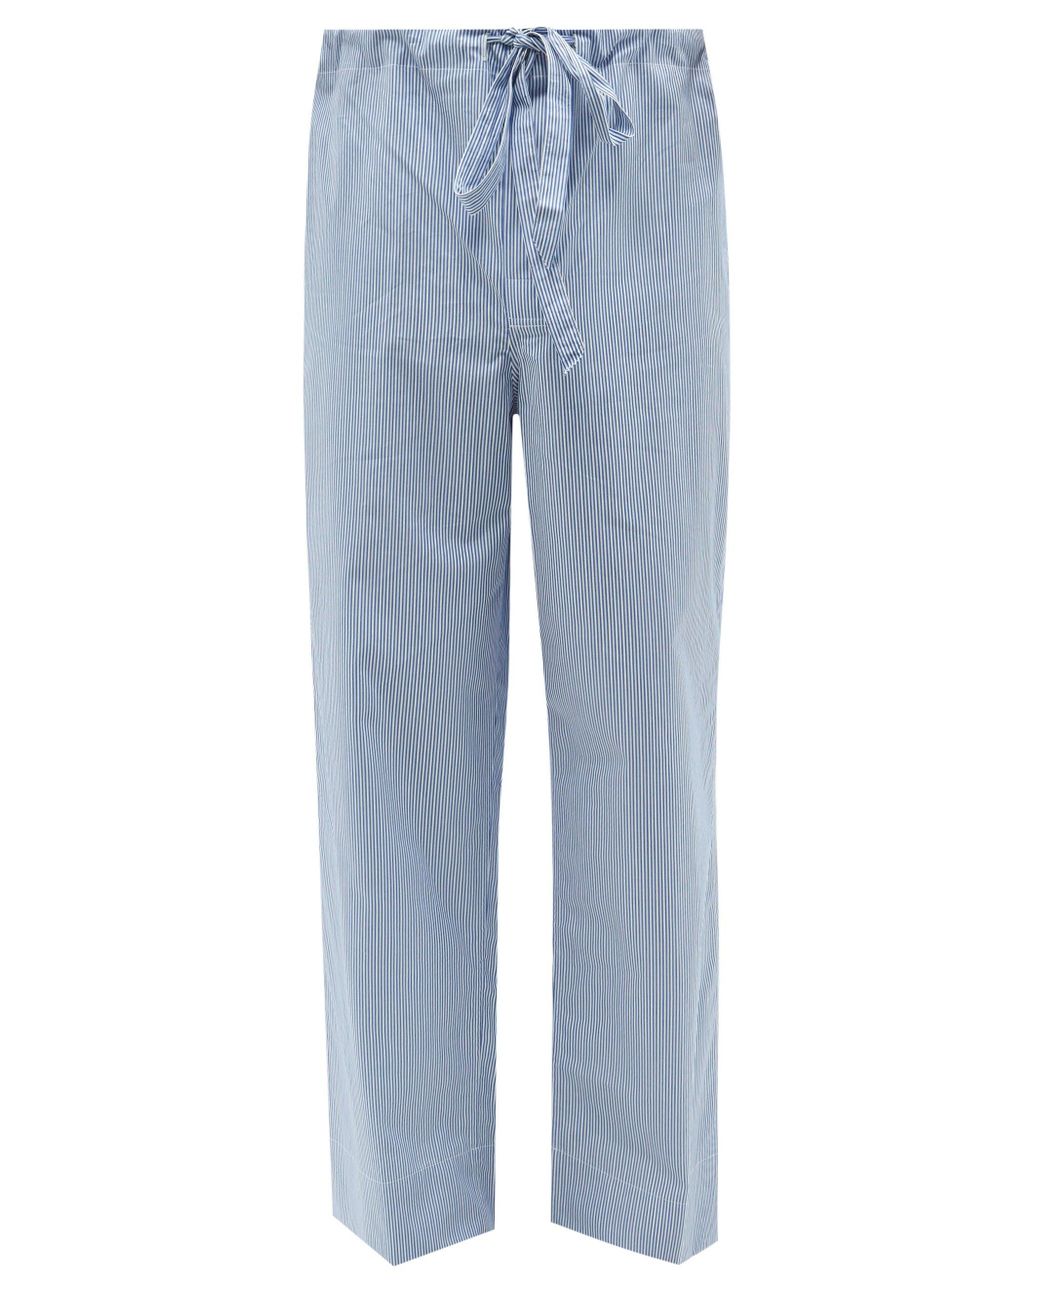 Charvet Drawstring-waist Striped Cotton Pyjama Trousers in Blue White (Blue)  for Men - Lyst